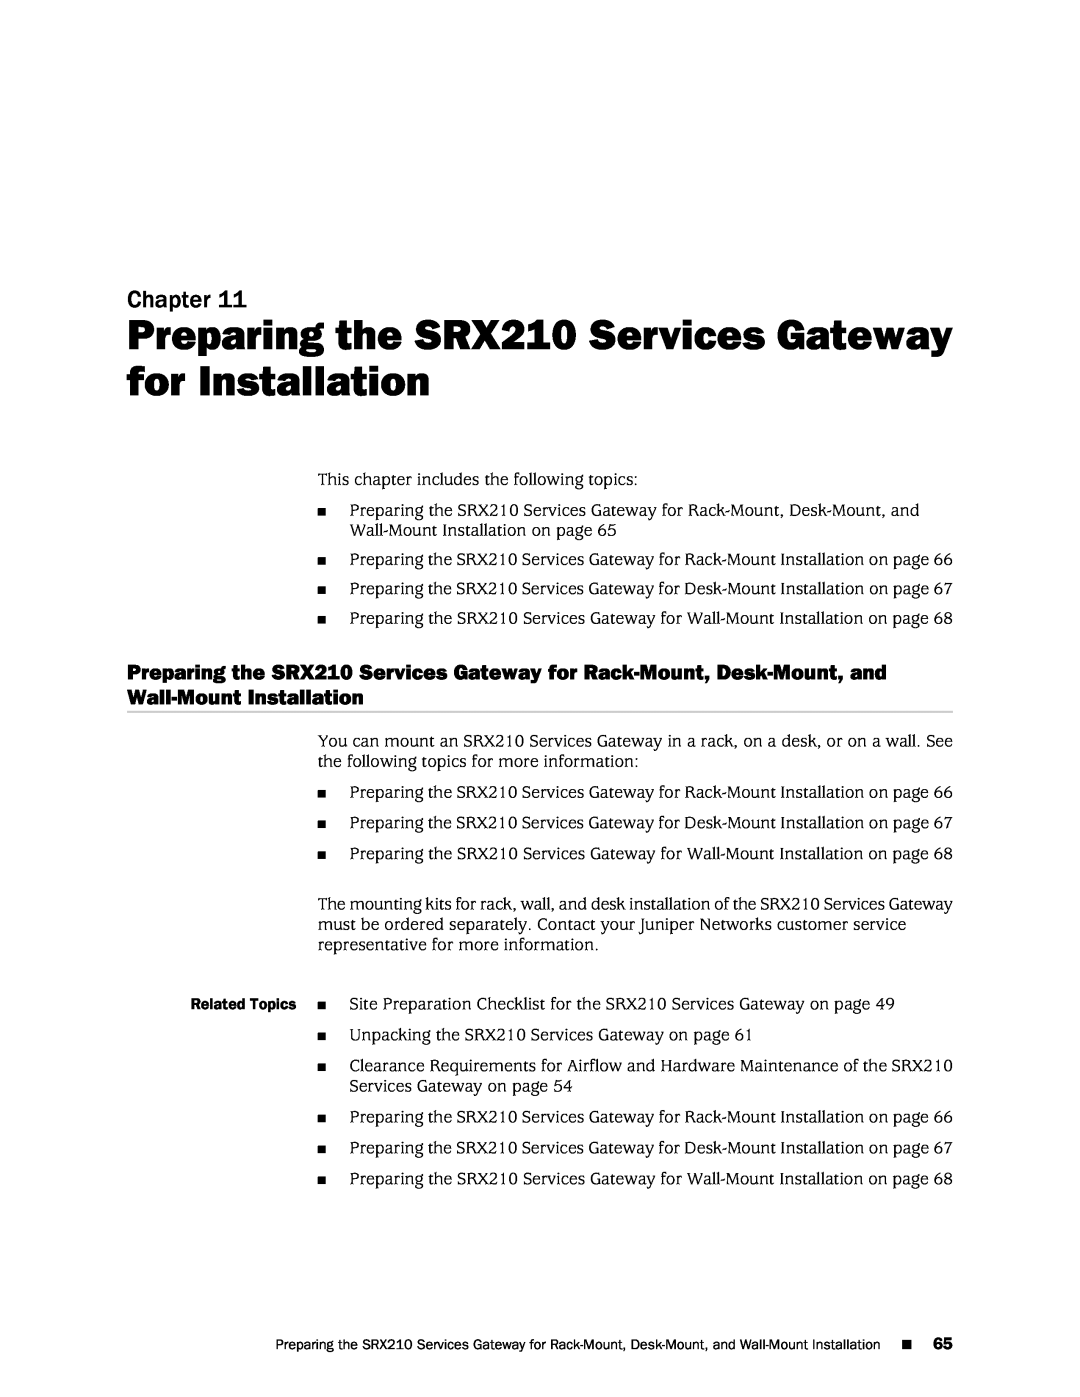 Juniper Networks SRX 210 manual Preparing the SRX210 Services Gateway for Installation, Chapter 